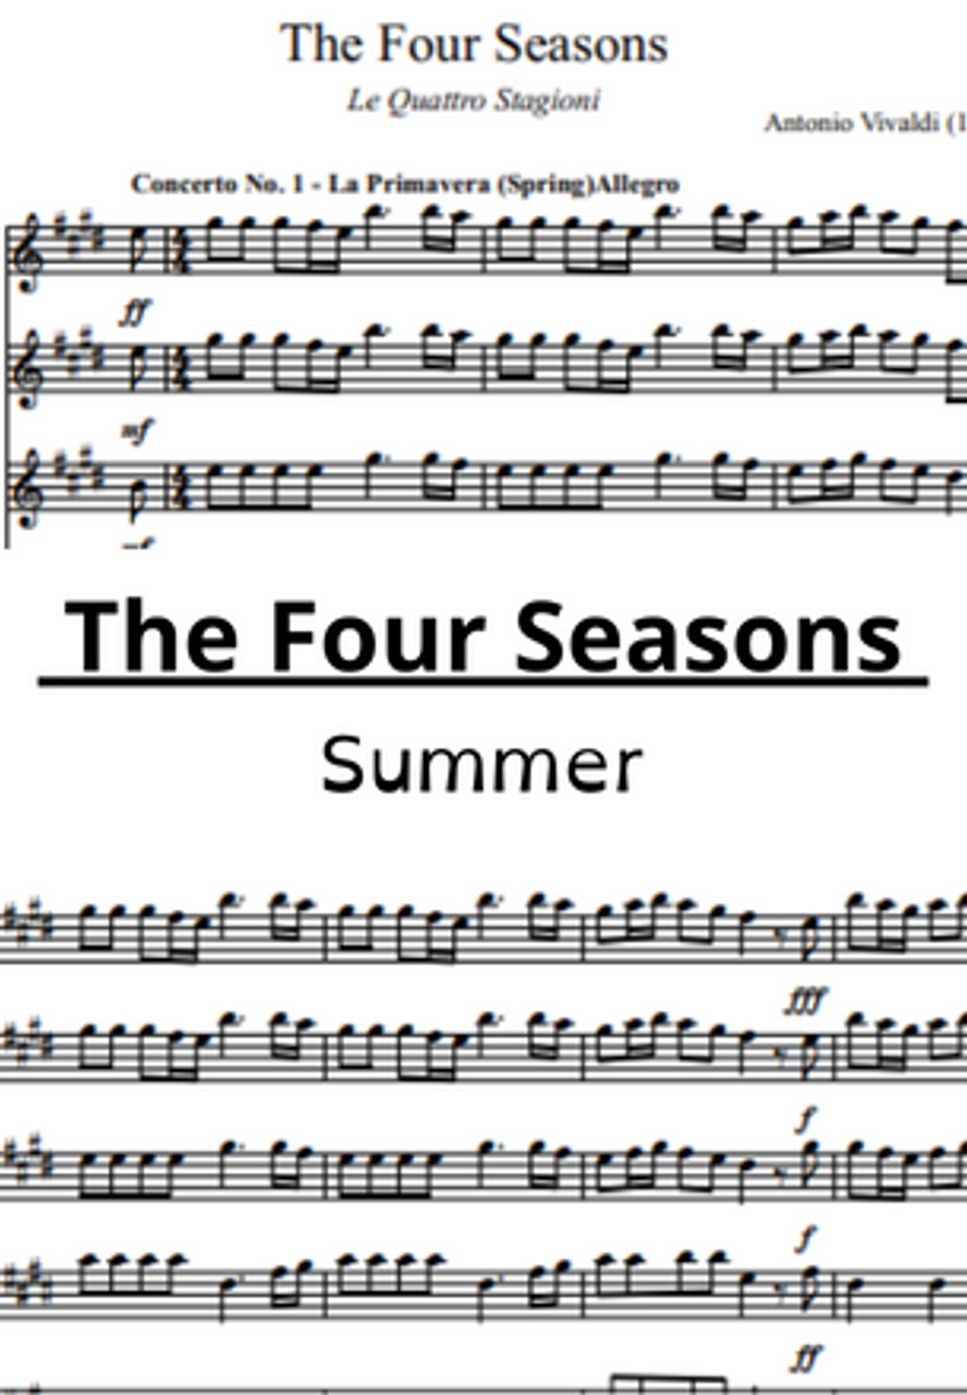 Antonio Vivaldi - The Four Seasons - Summer (String Ensemble: violins, viola and cello) by Sheet Music For Strings